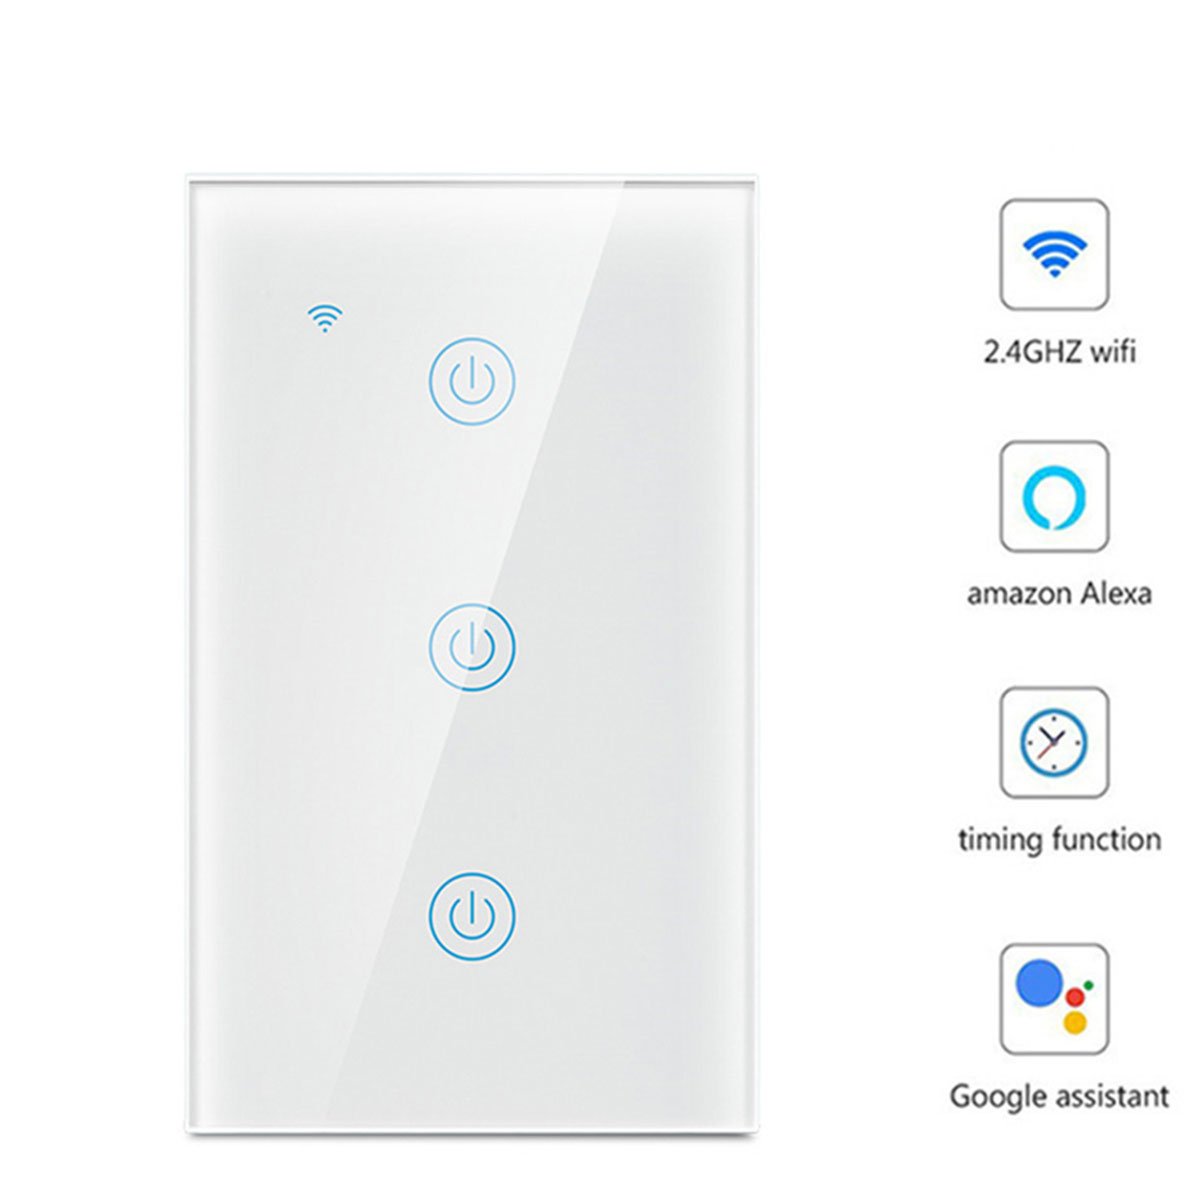 Regleta inteligente WiFi Tuya Smart compatible  Alexa y Google Home  ✓✓✓ 